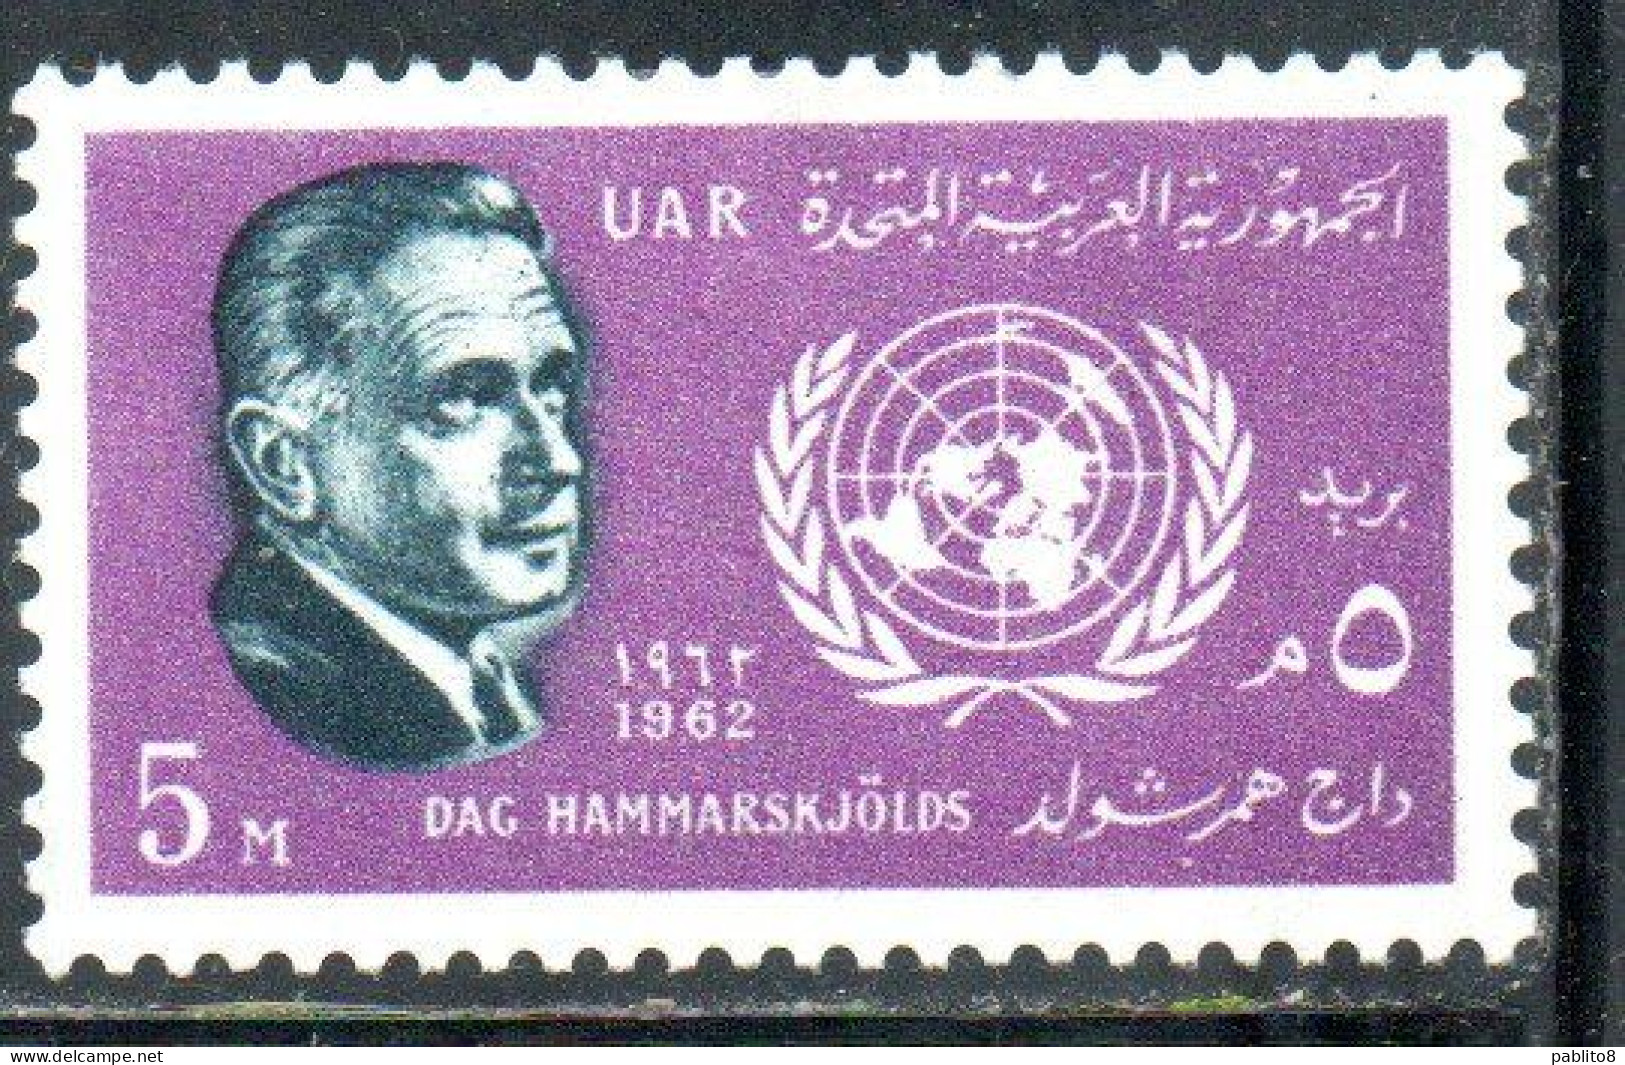 UAR EGYPT EGITTO 1962 DAG HAMMARSKJOLD SECRETARY GENERAL OF THE UN ONU 5m MH - Neufs